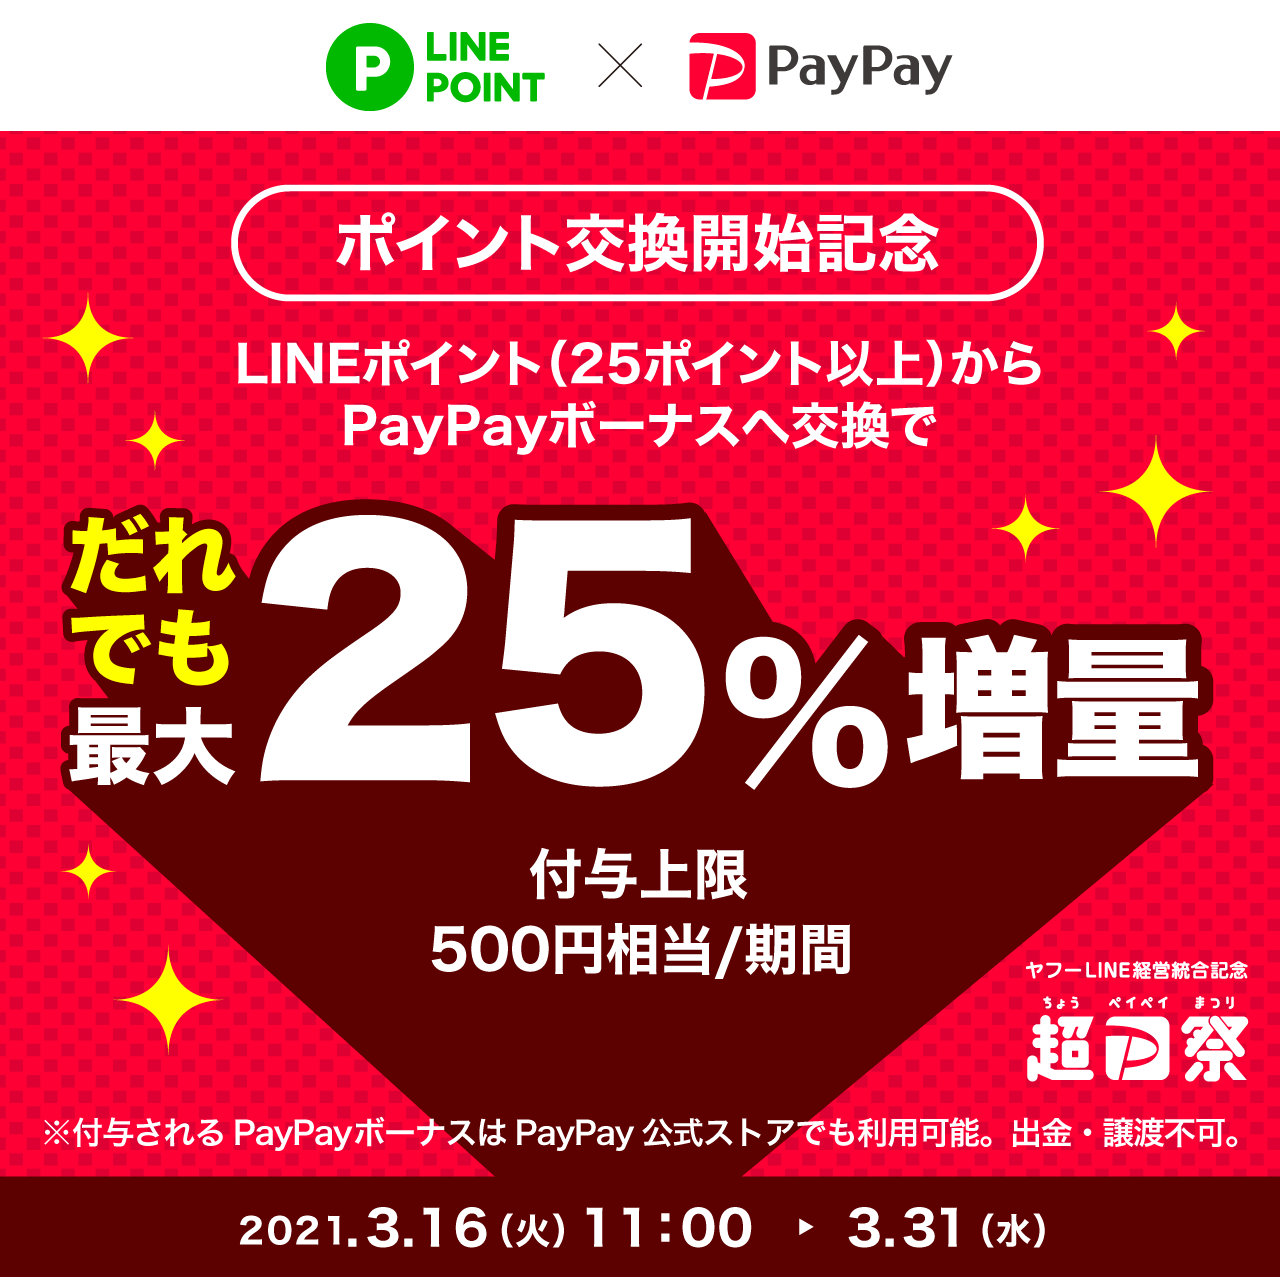 LINEポイントをPayPayボーナス交換可能に　LINE PayとPayPay統合の一環